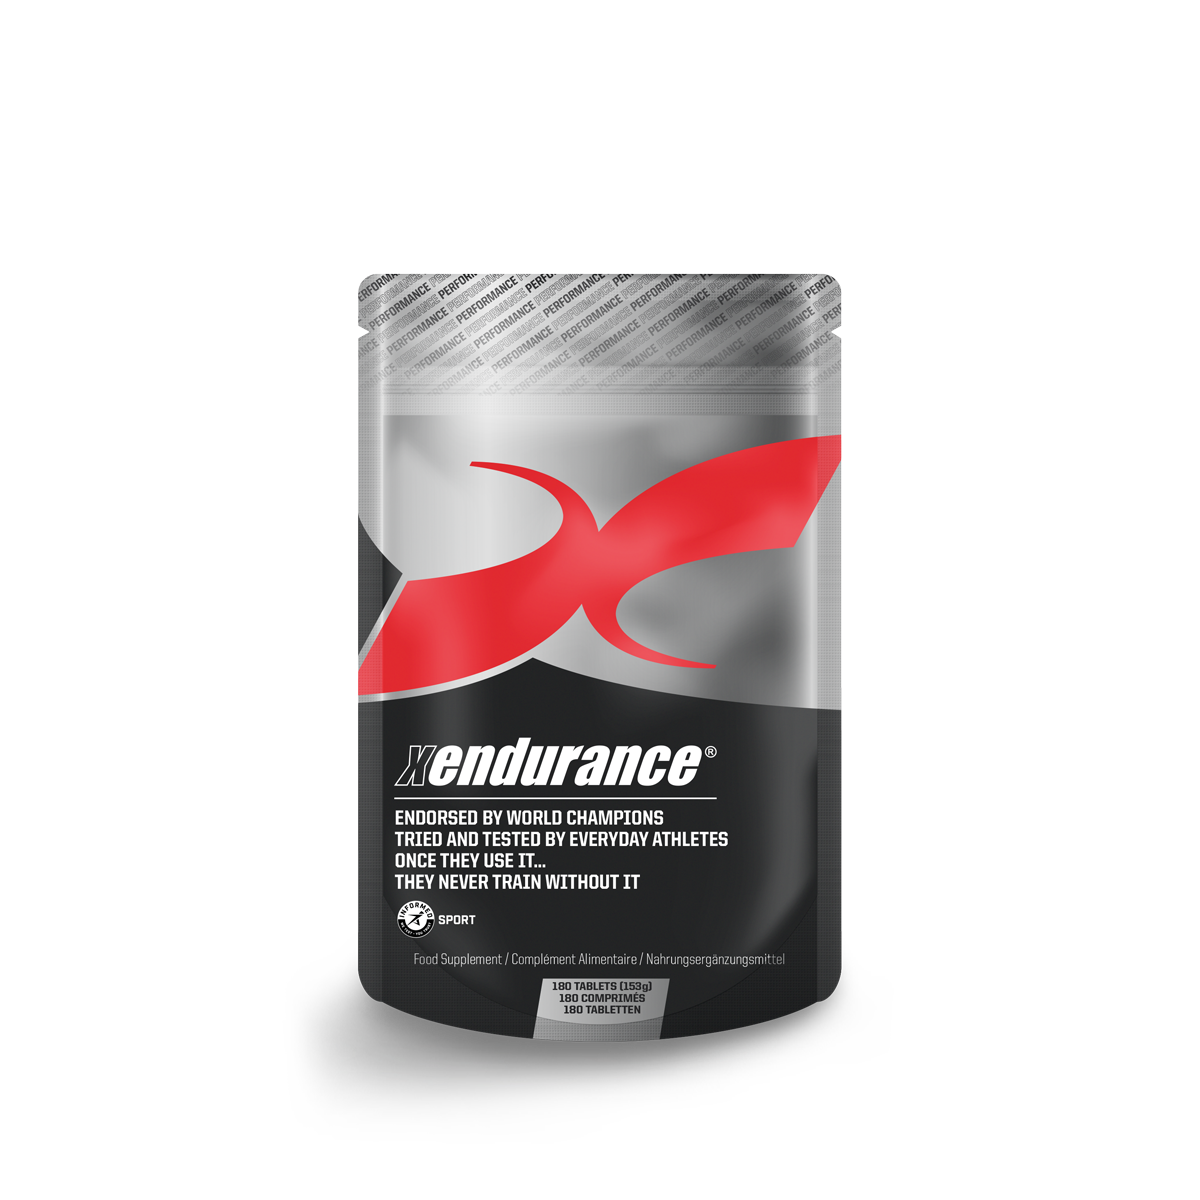 Endurance Bundle - Lactic acid buffer, Fuel-5, Hydro Sticks, Gels, Bottle